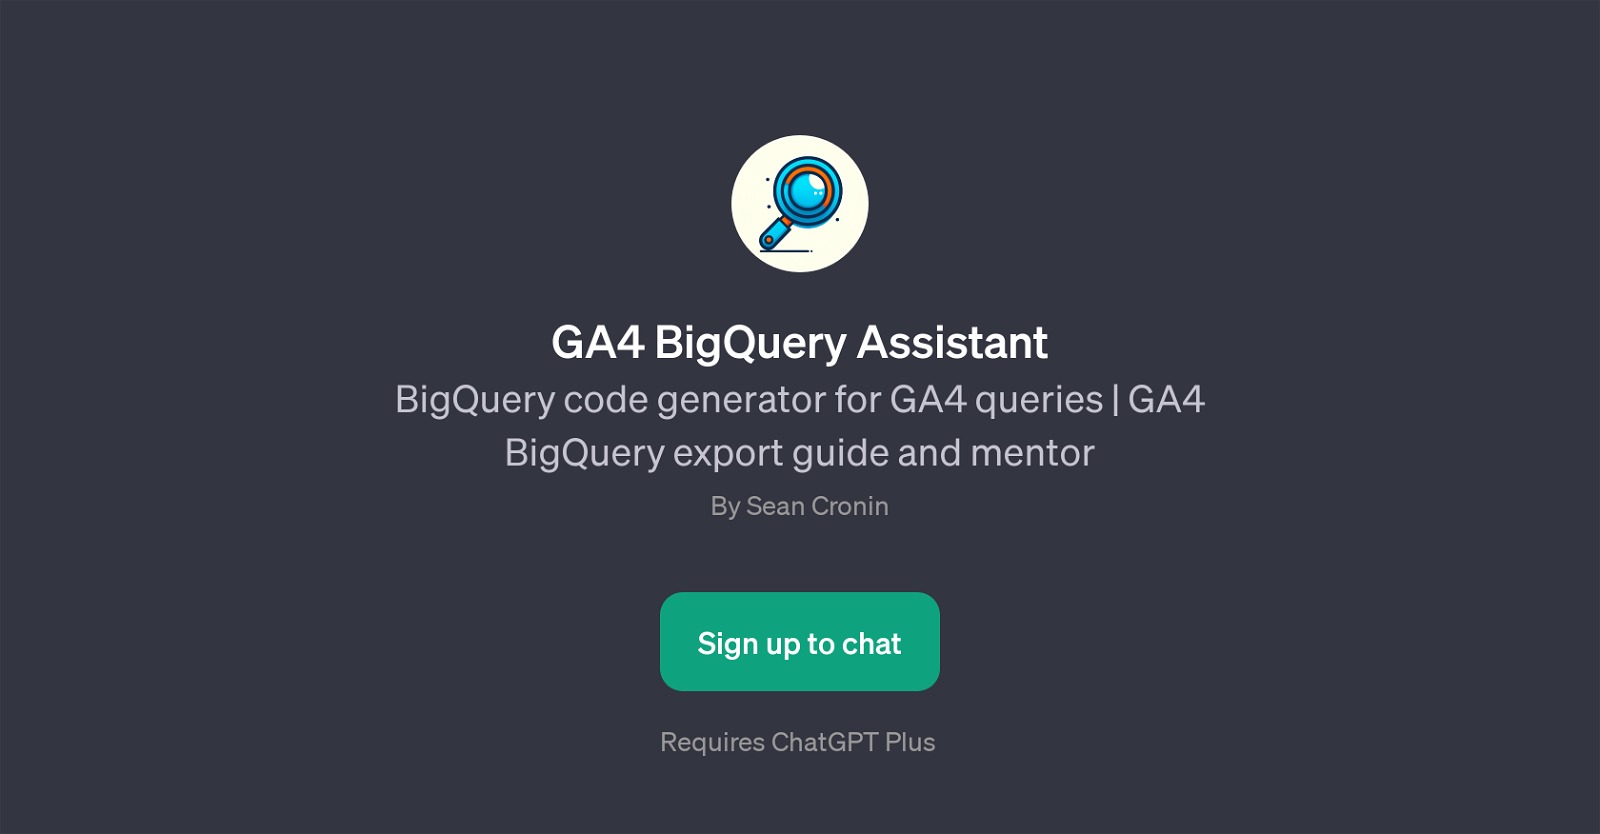 GA4 BigQuery Assistant website